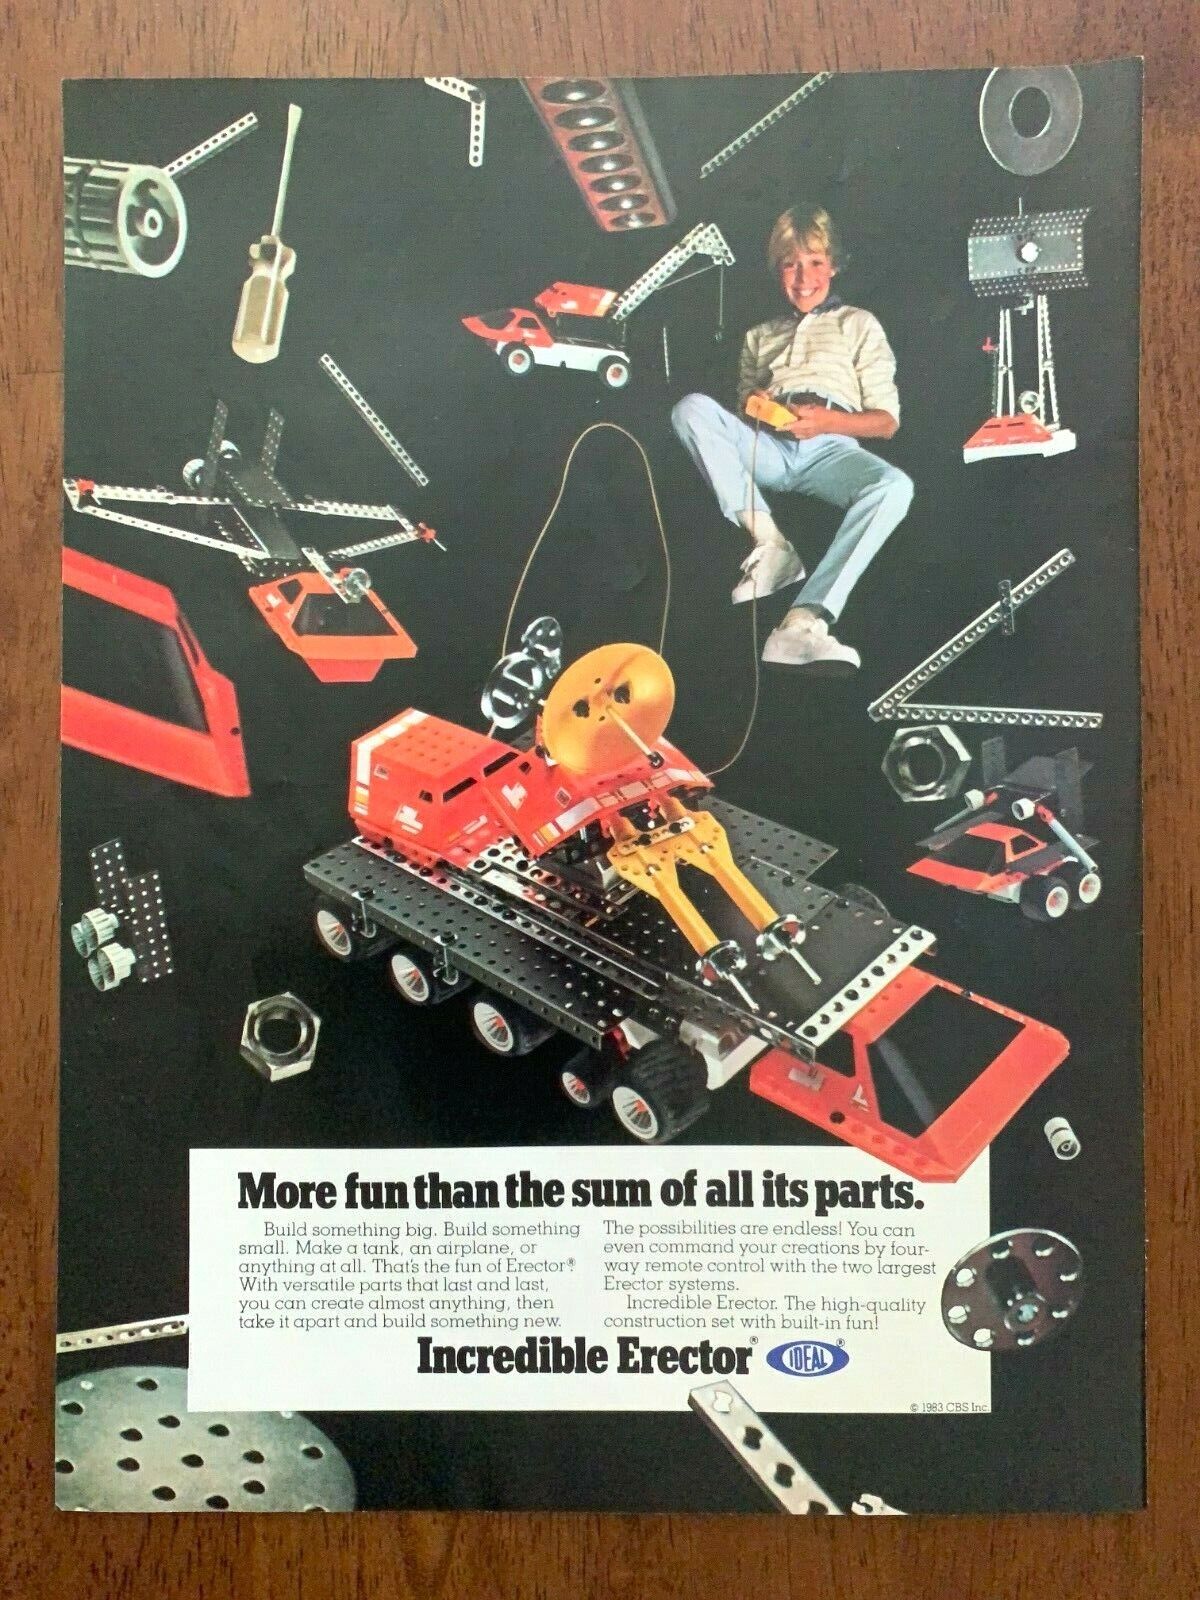 1983 Ideal Incredible Erector Vintage Toy Print Ad/Poster Retro Pop Art Décor 